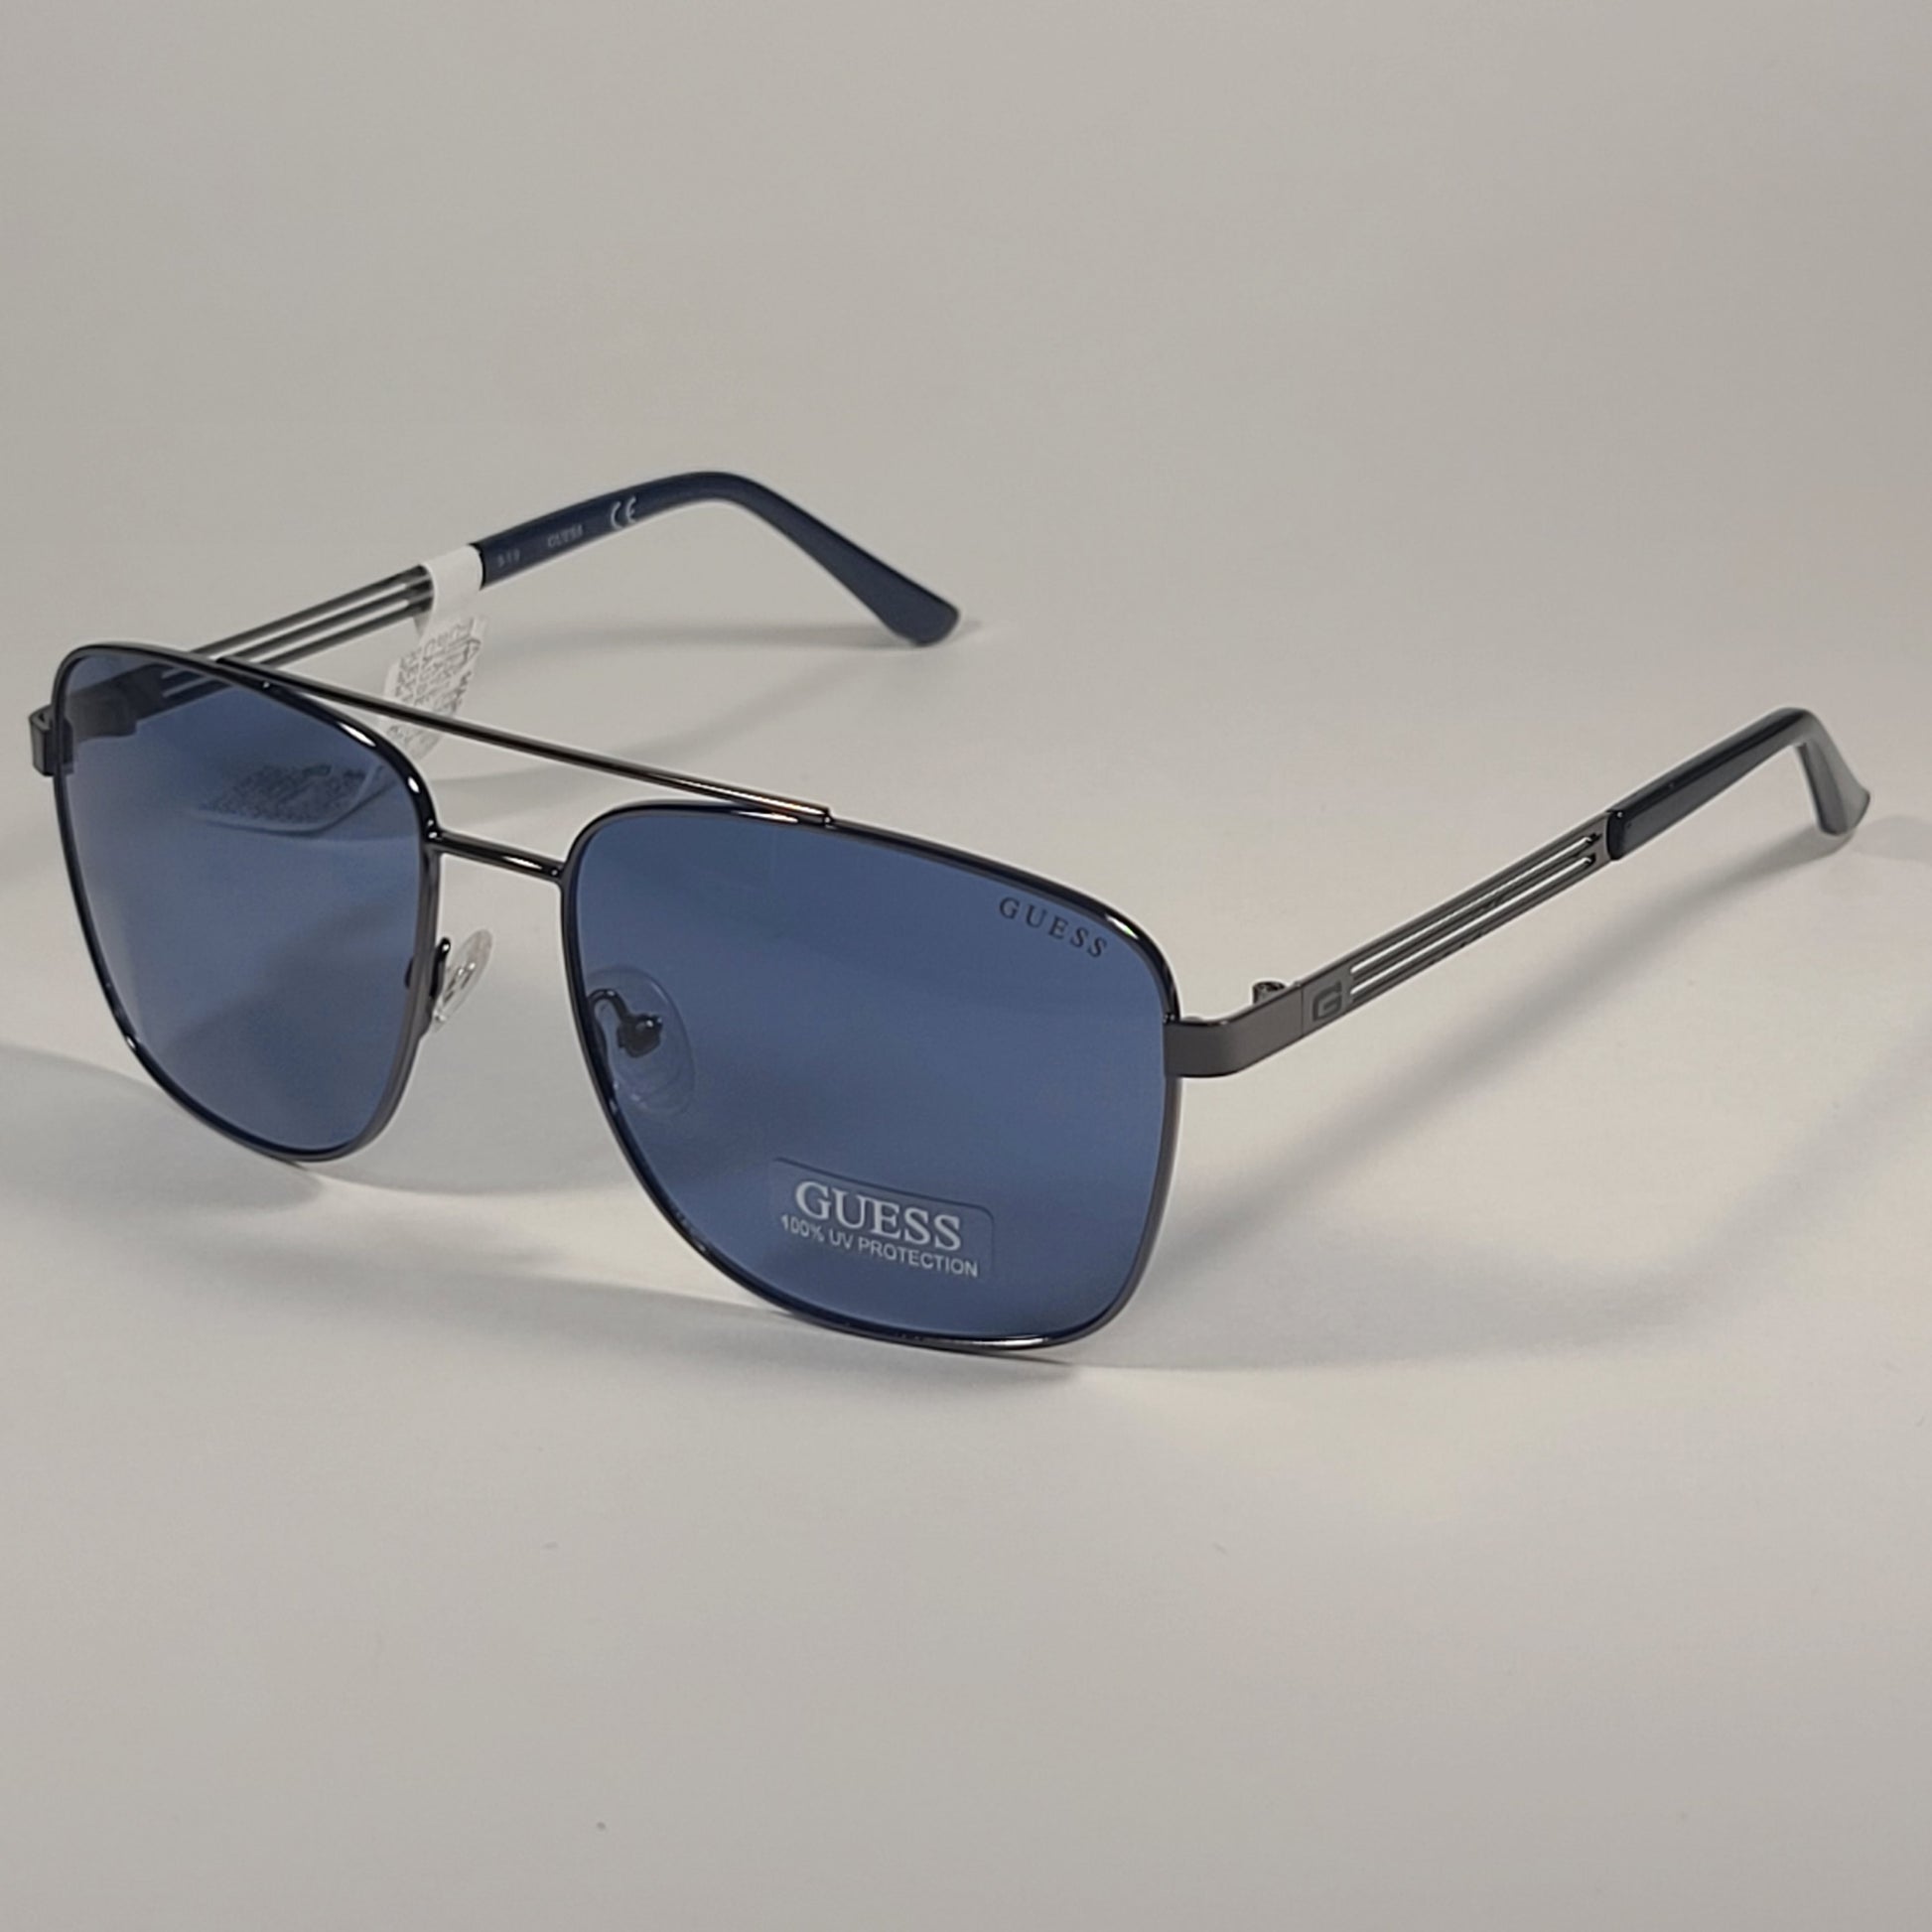 Guess Men's Sunglasses Sports Pilot Frame GU00038